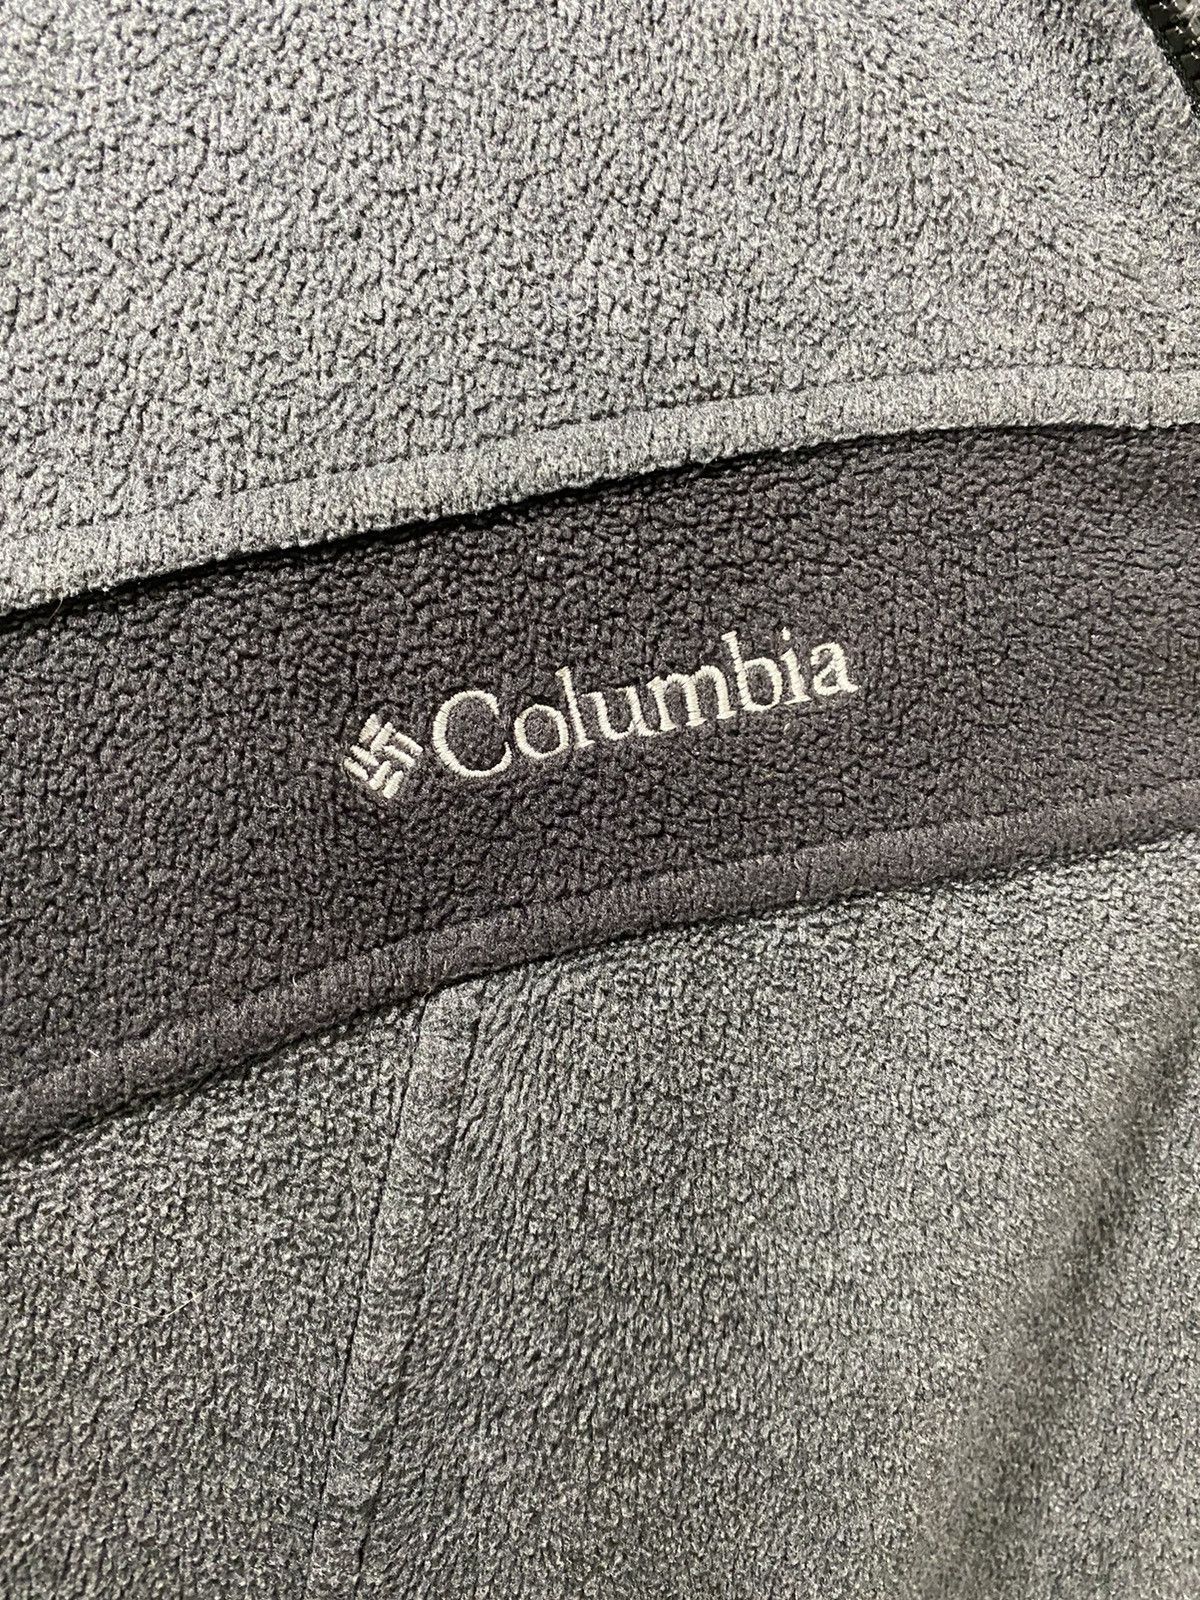 Vintage Vintage Columbia Full Zip Sweater Size US L / EU 52-54 / 3 - 2 Preview